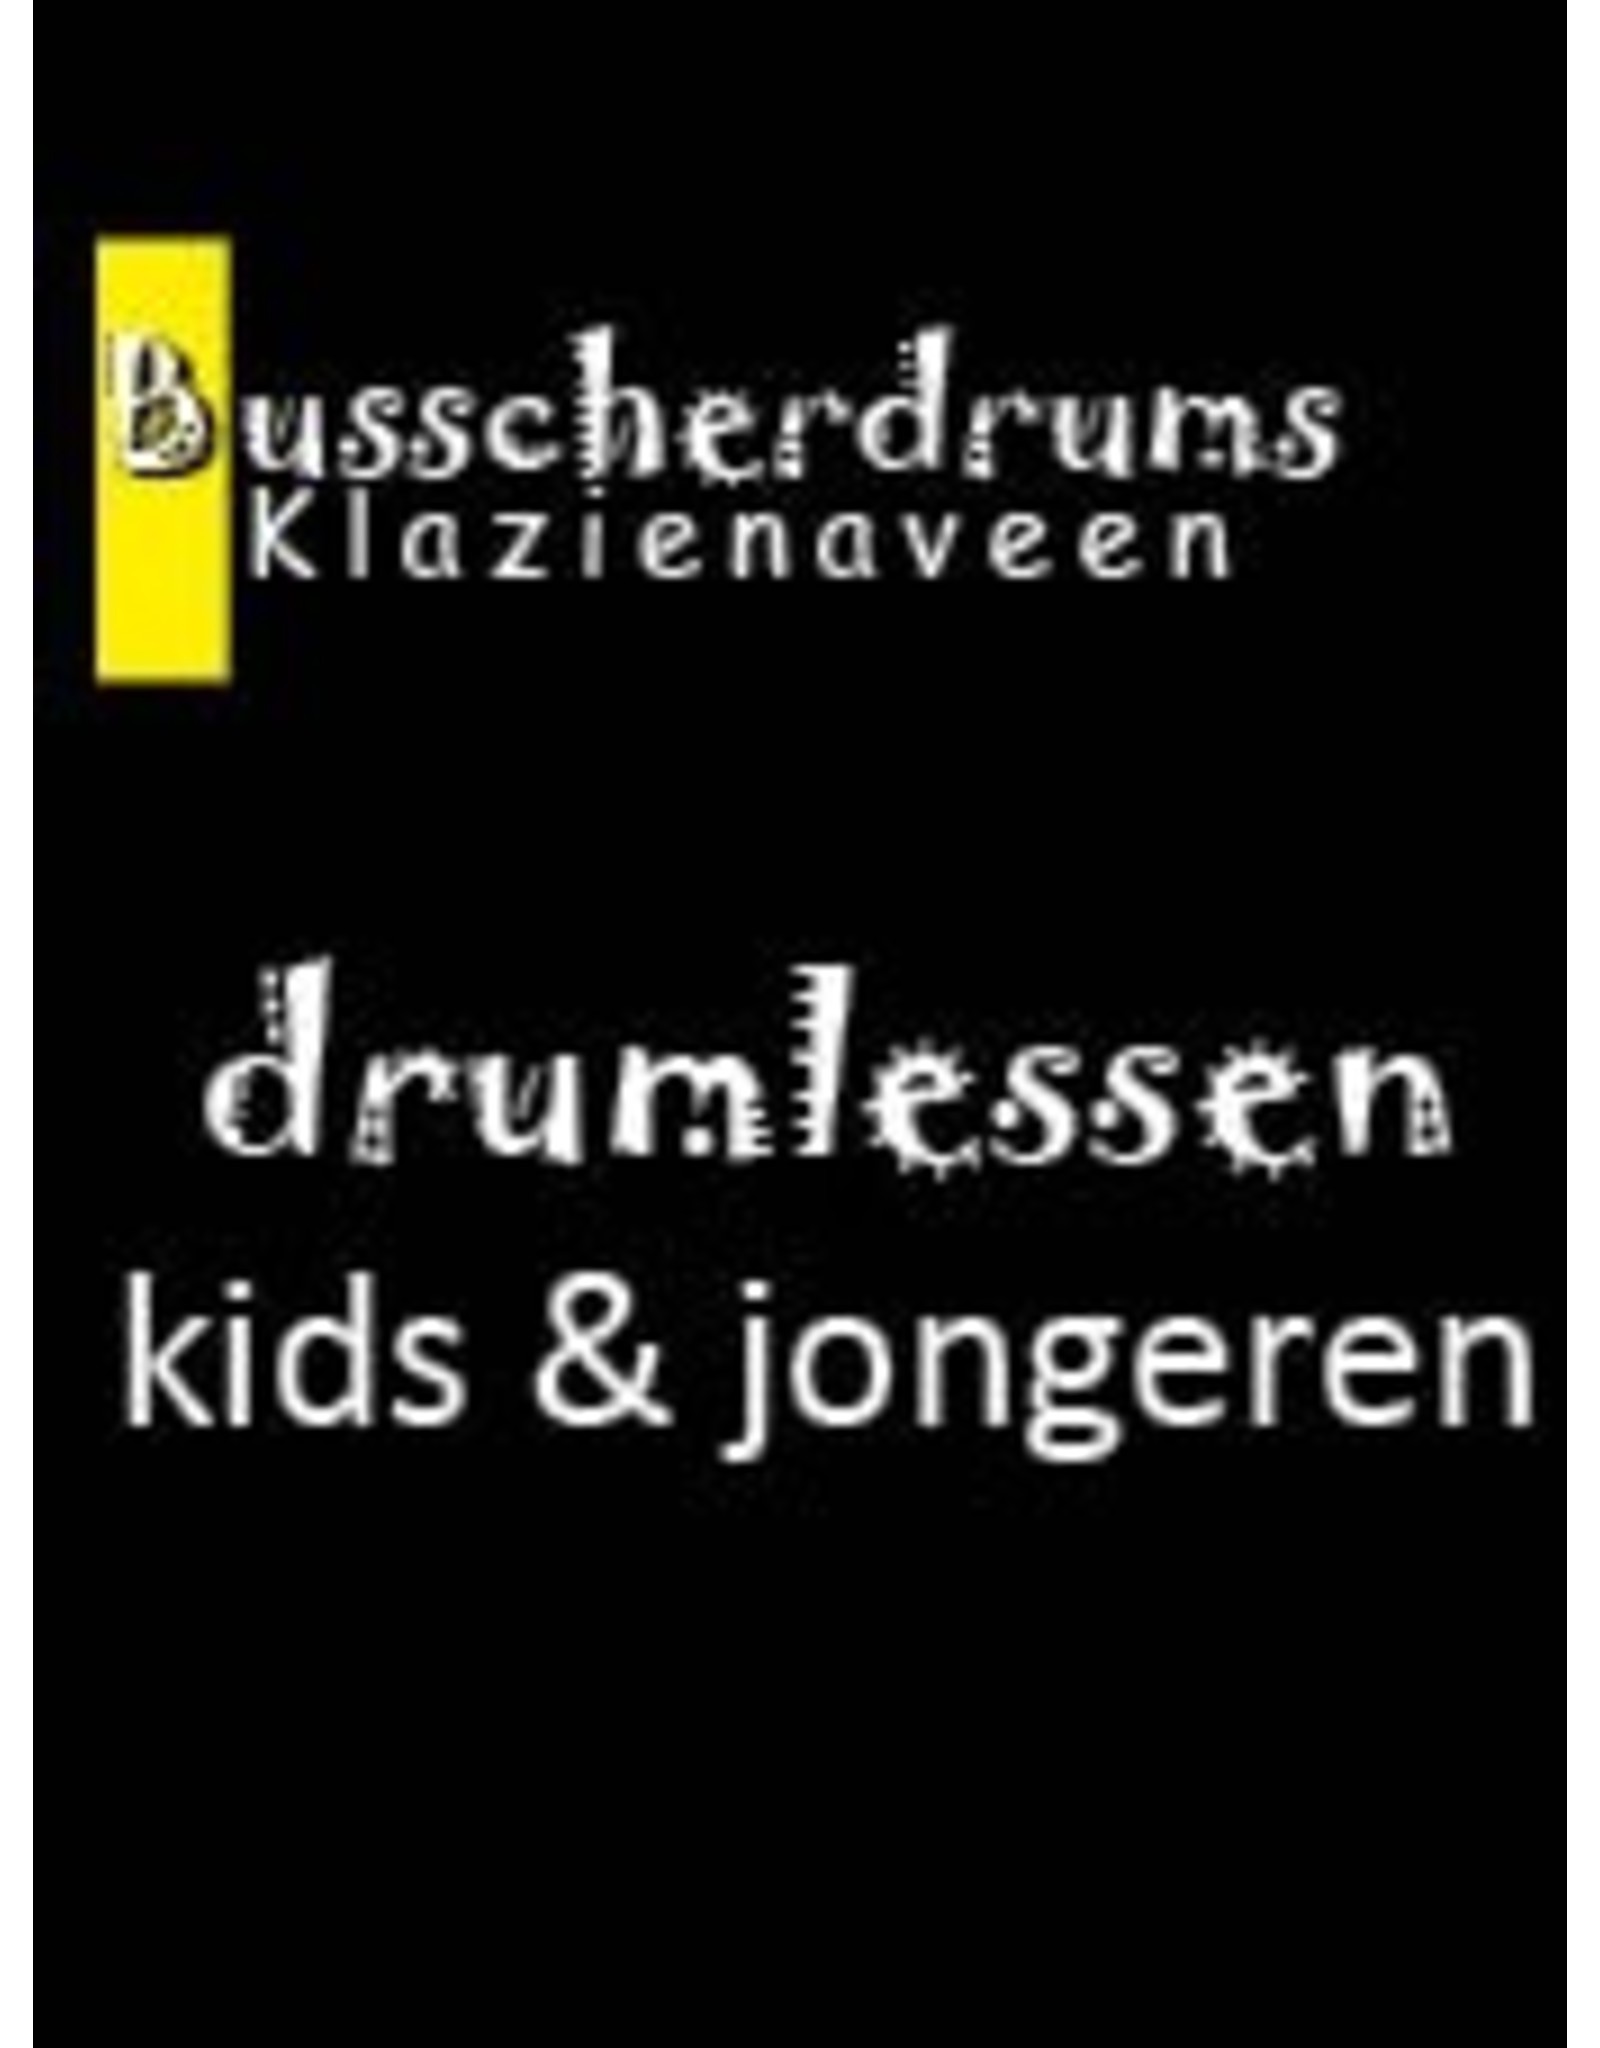 Busscherdrums Drum Lessons FLEX20Lessenkaart 30 Minuten Einzelschlagzeugunterricht Kinder & Jugend 902